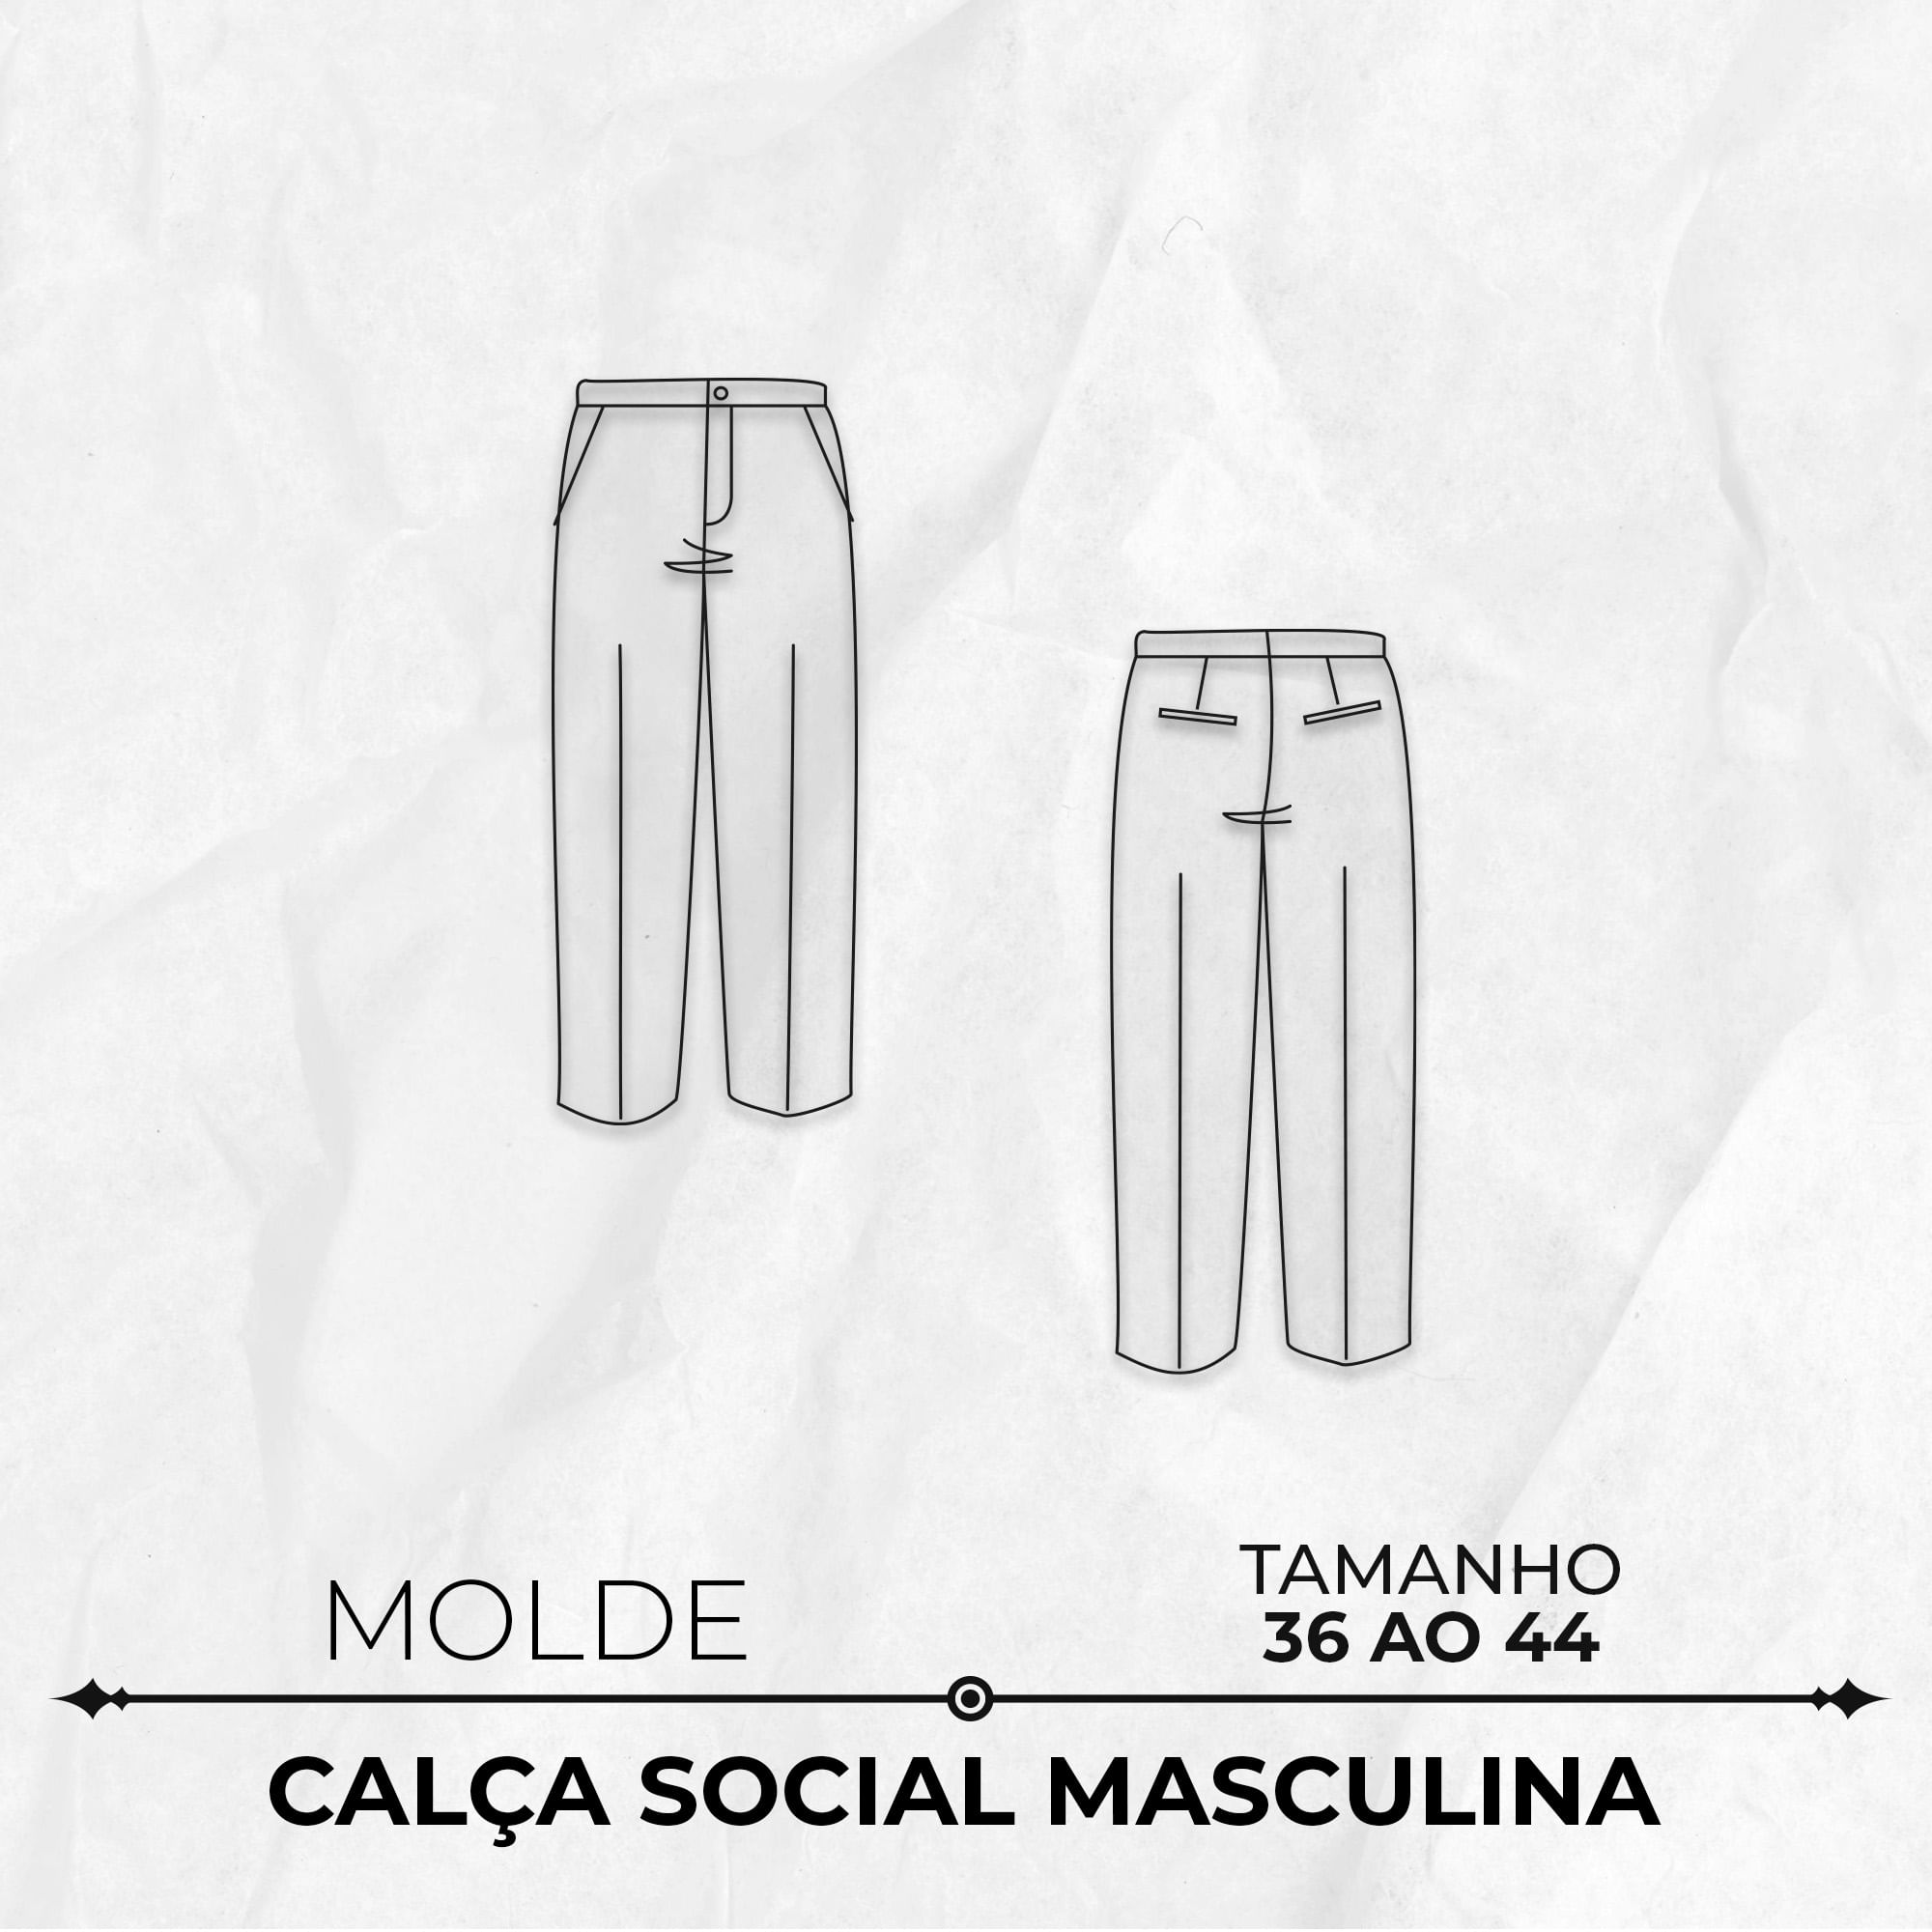 Molde calça social masculina tamanho 36 ao 44 by Marlene Mukai